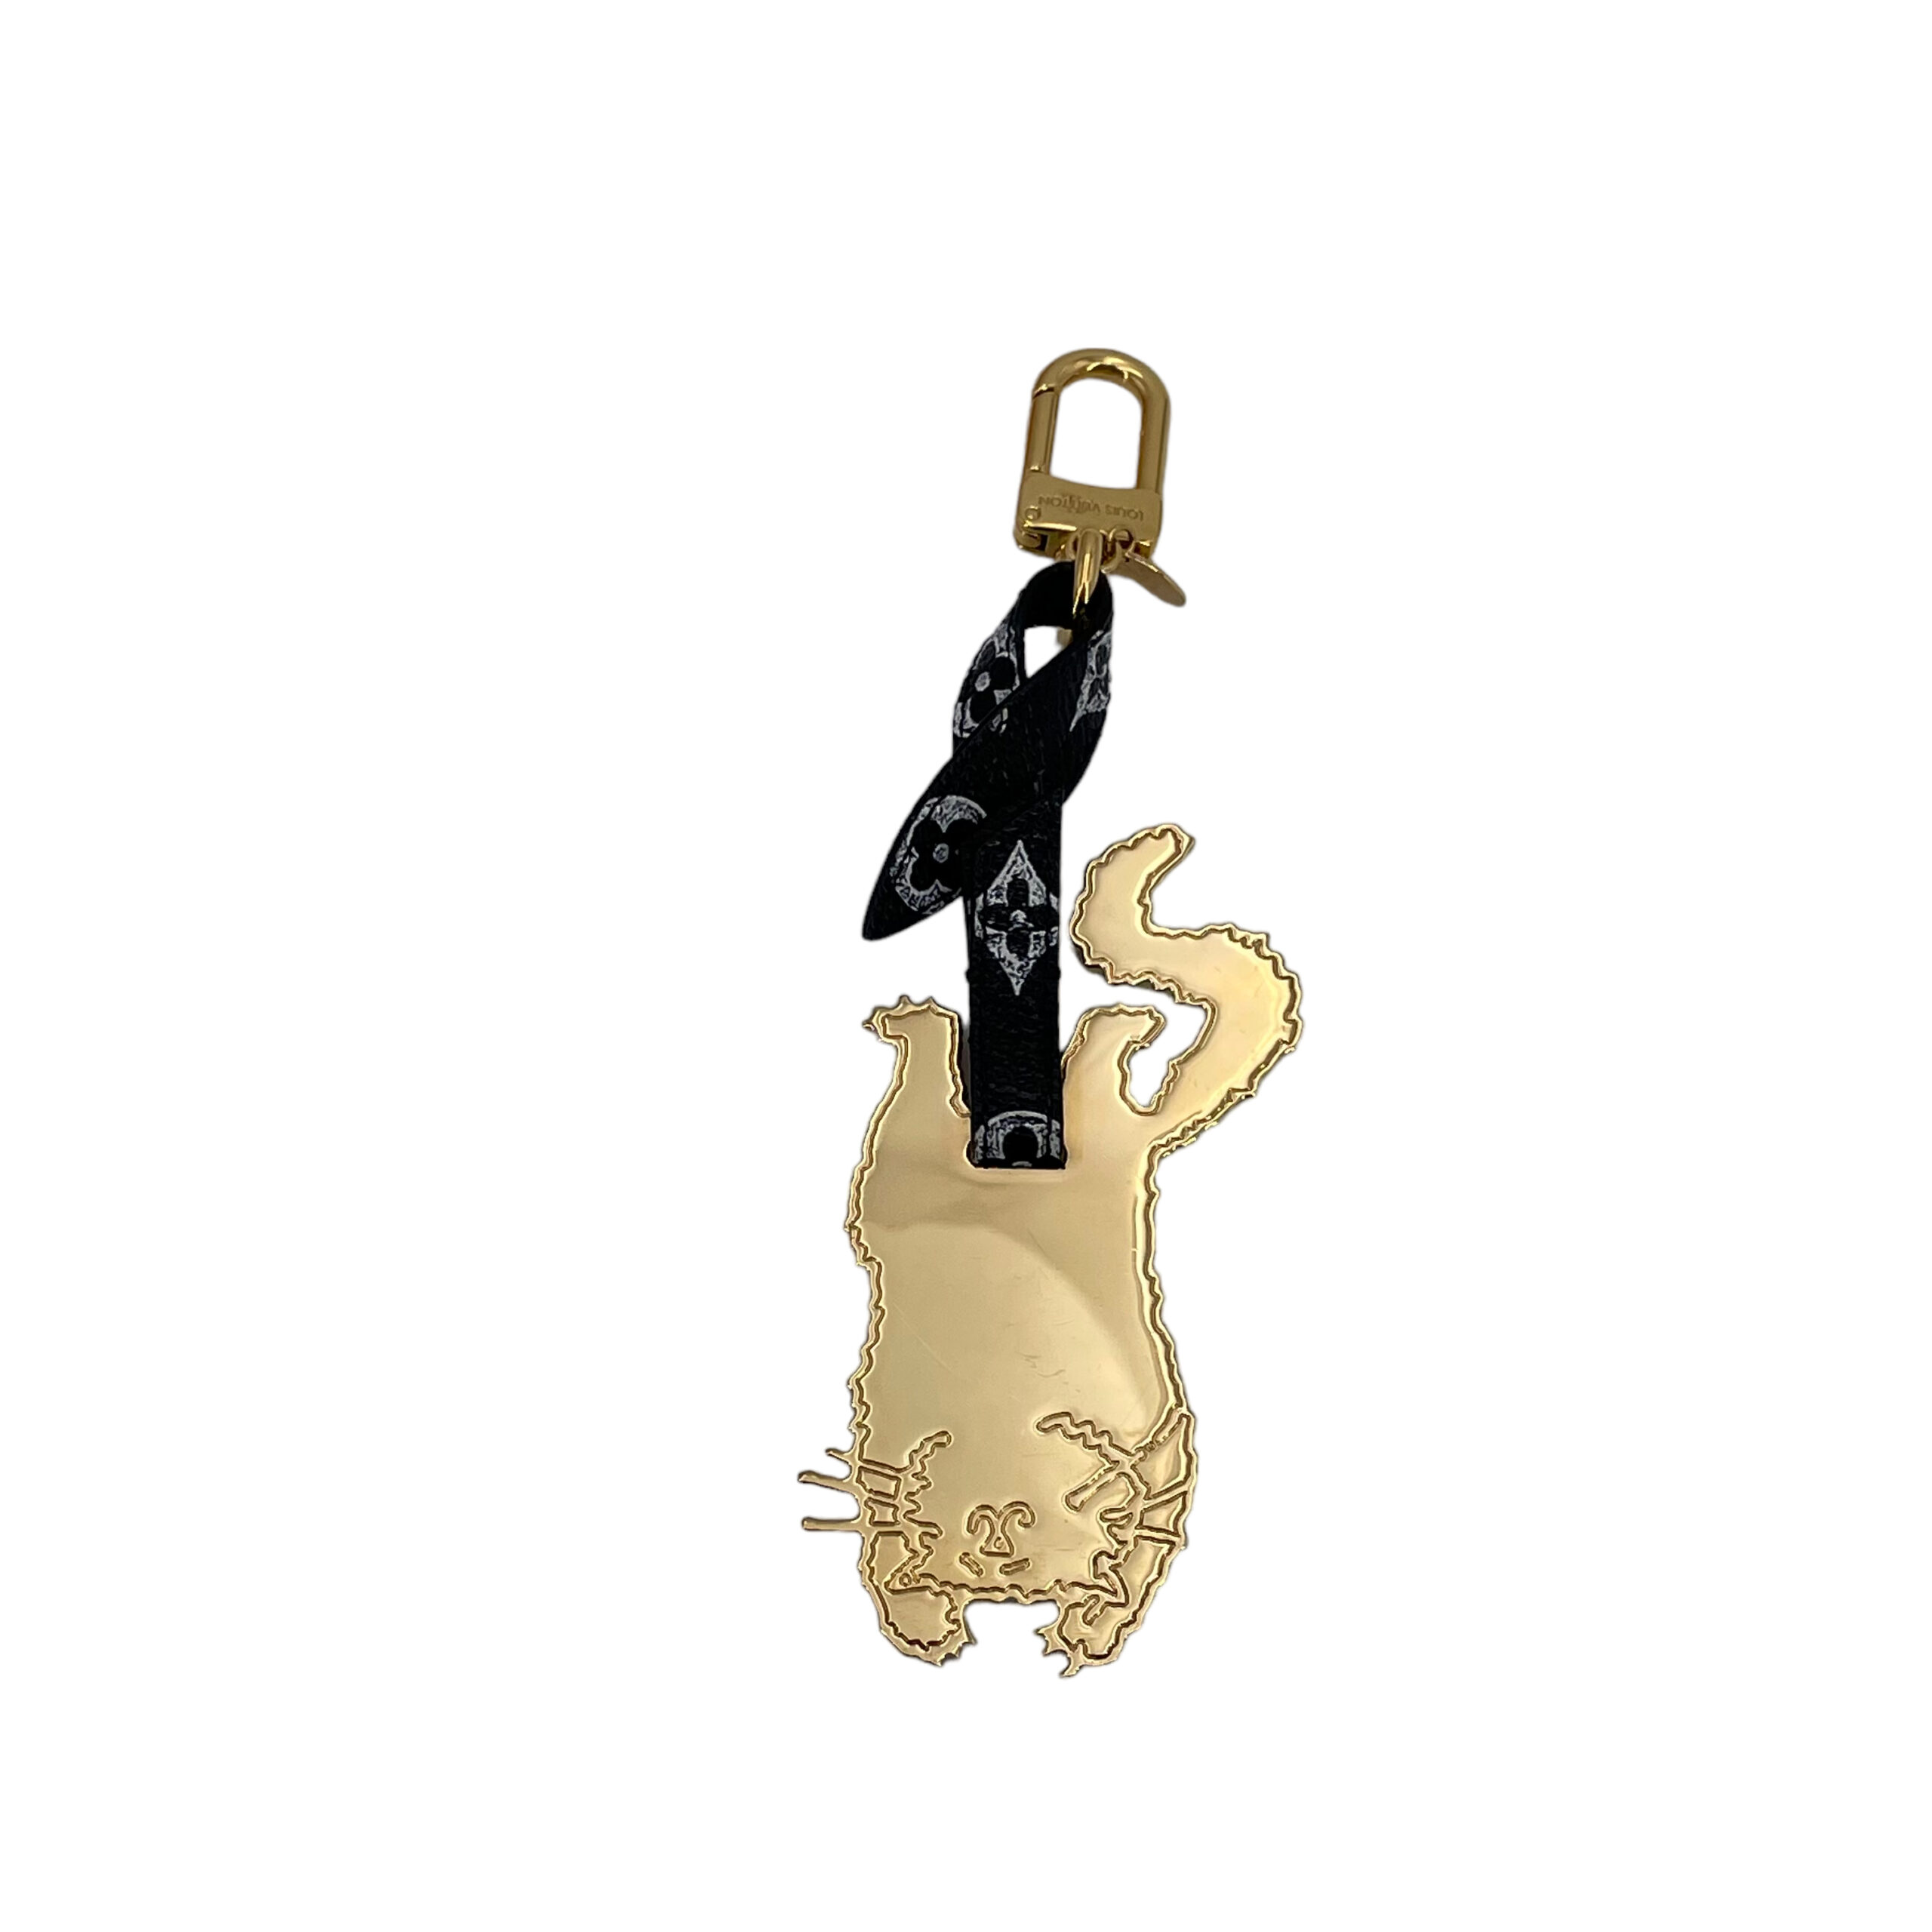 Naughtipidgins Nest - New Louis Vuitton Limited Edition Grace Coddington  Catogram Dog Keychain Bag Charm. From the Grace Coddington 'Catogram'  collaboration this divine, doggy delight depicts creative director Nicolas  Ghesquière's black lab